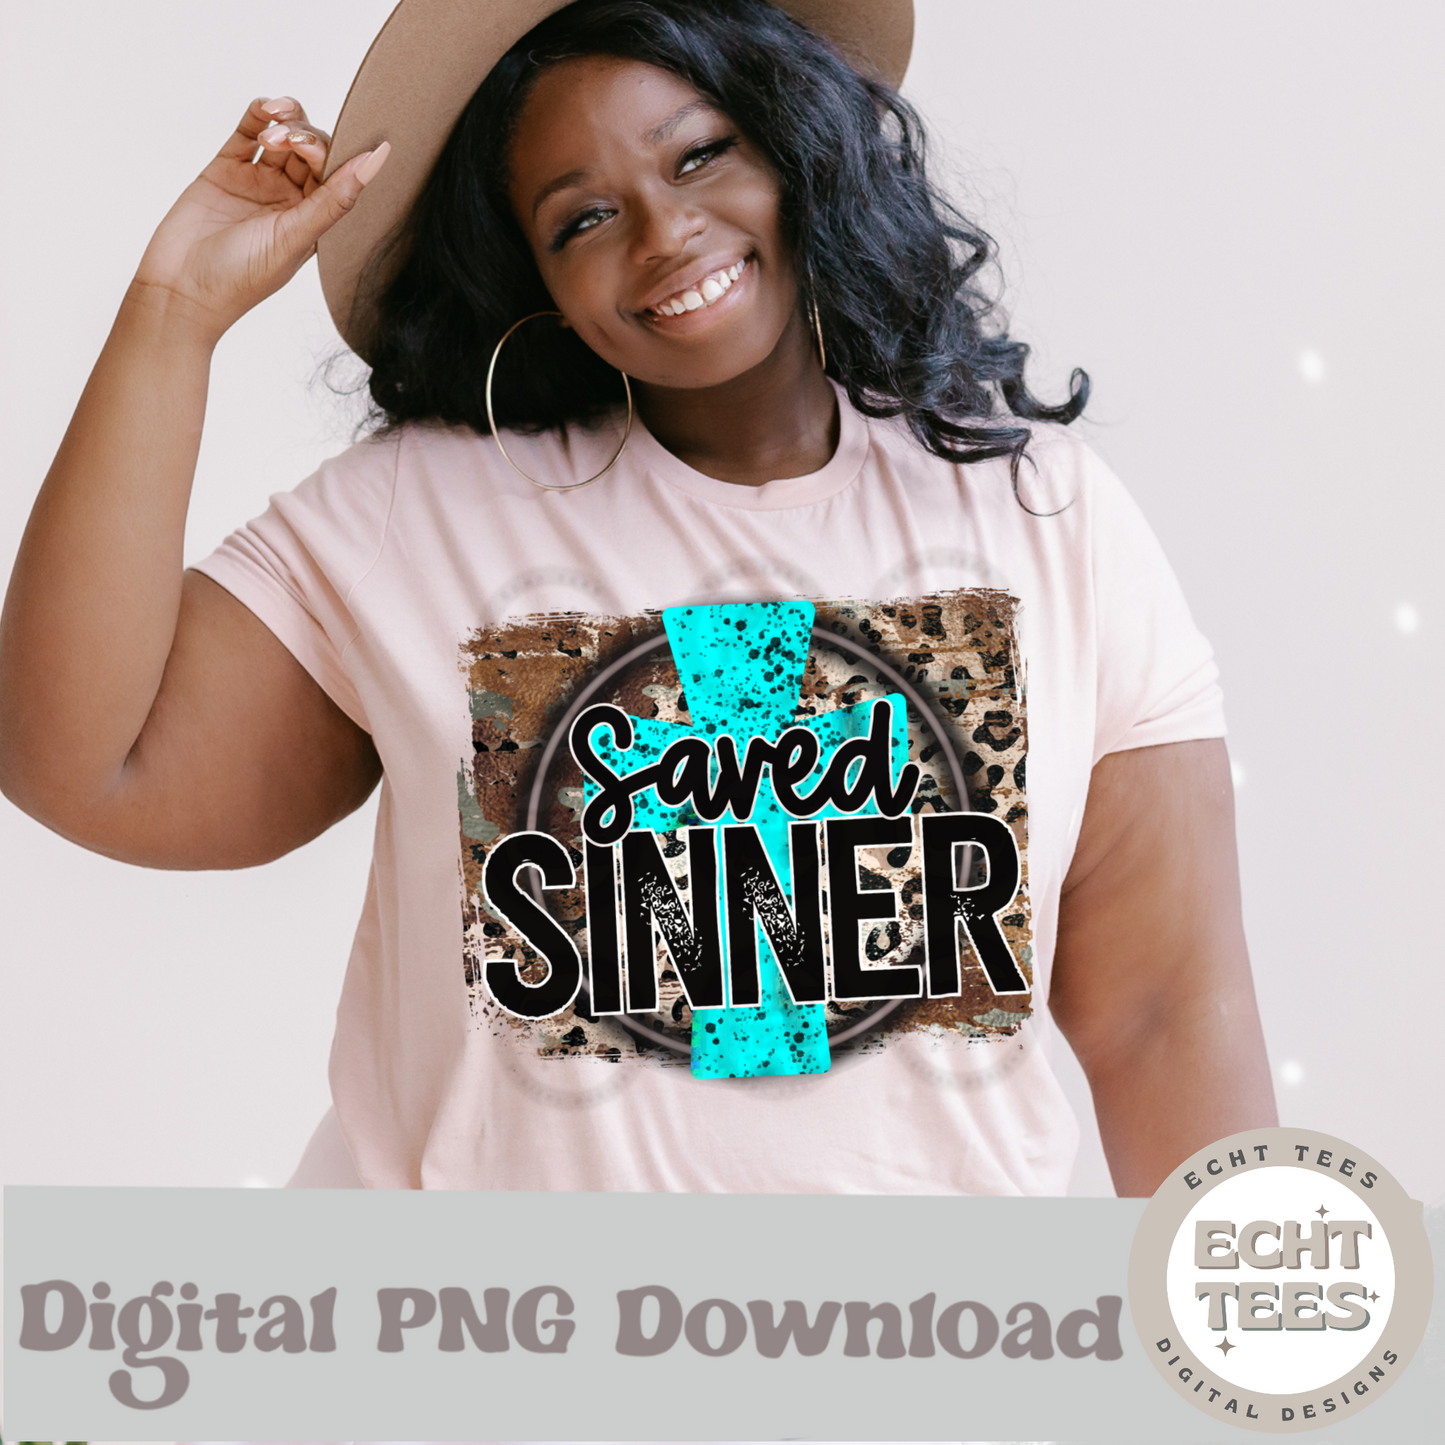 Saved Sinner PNG Digital Download